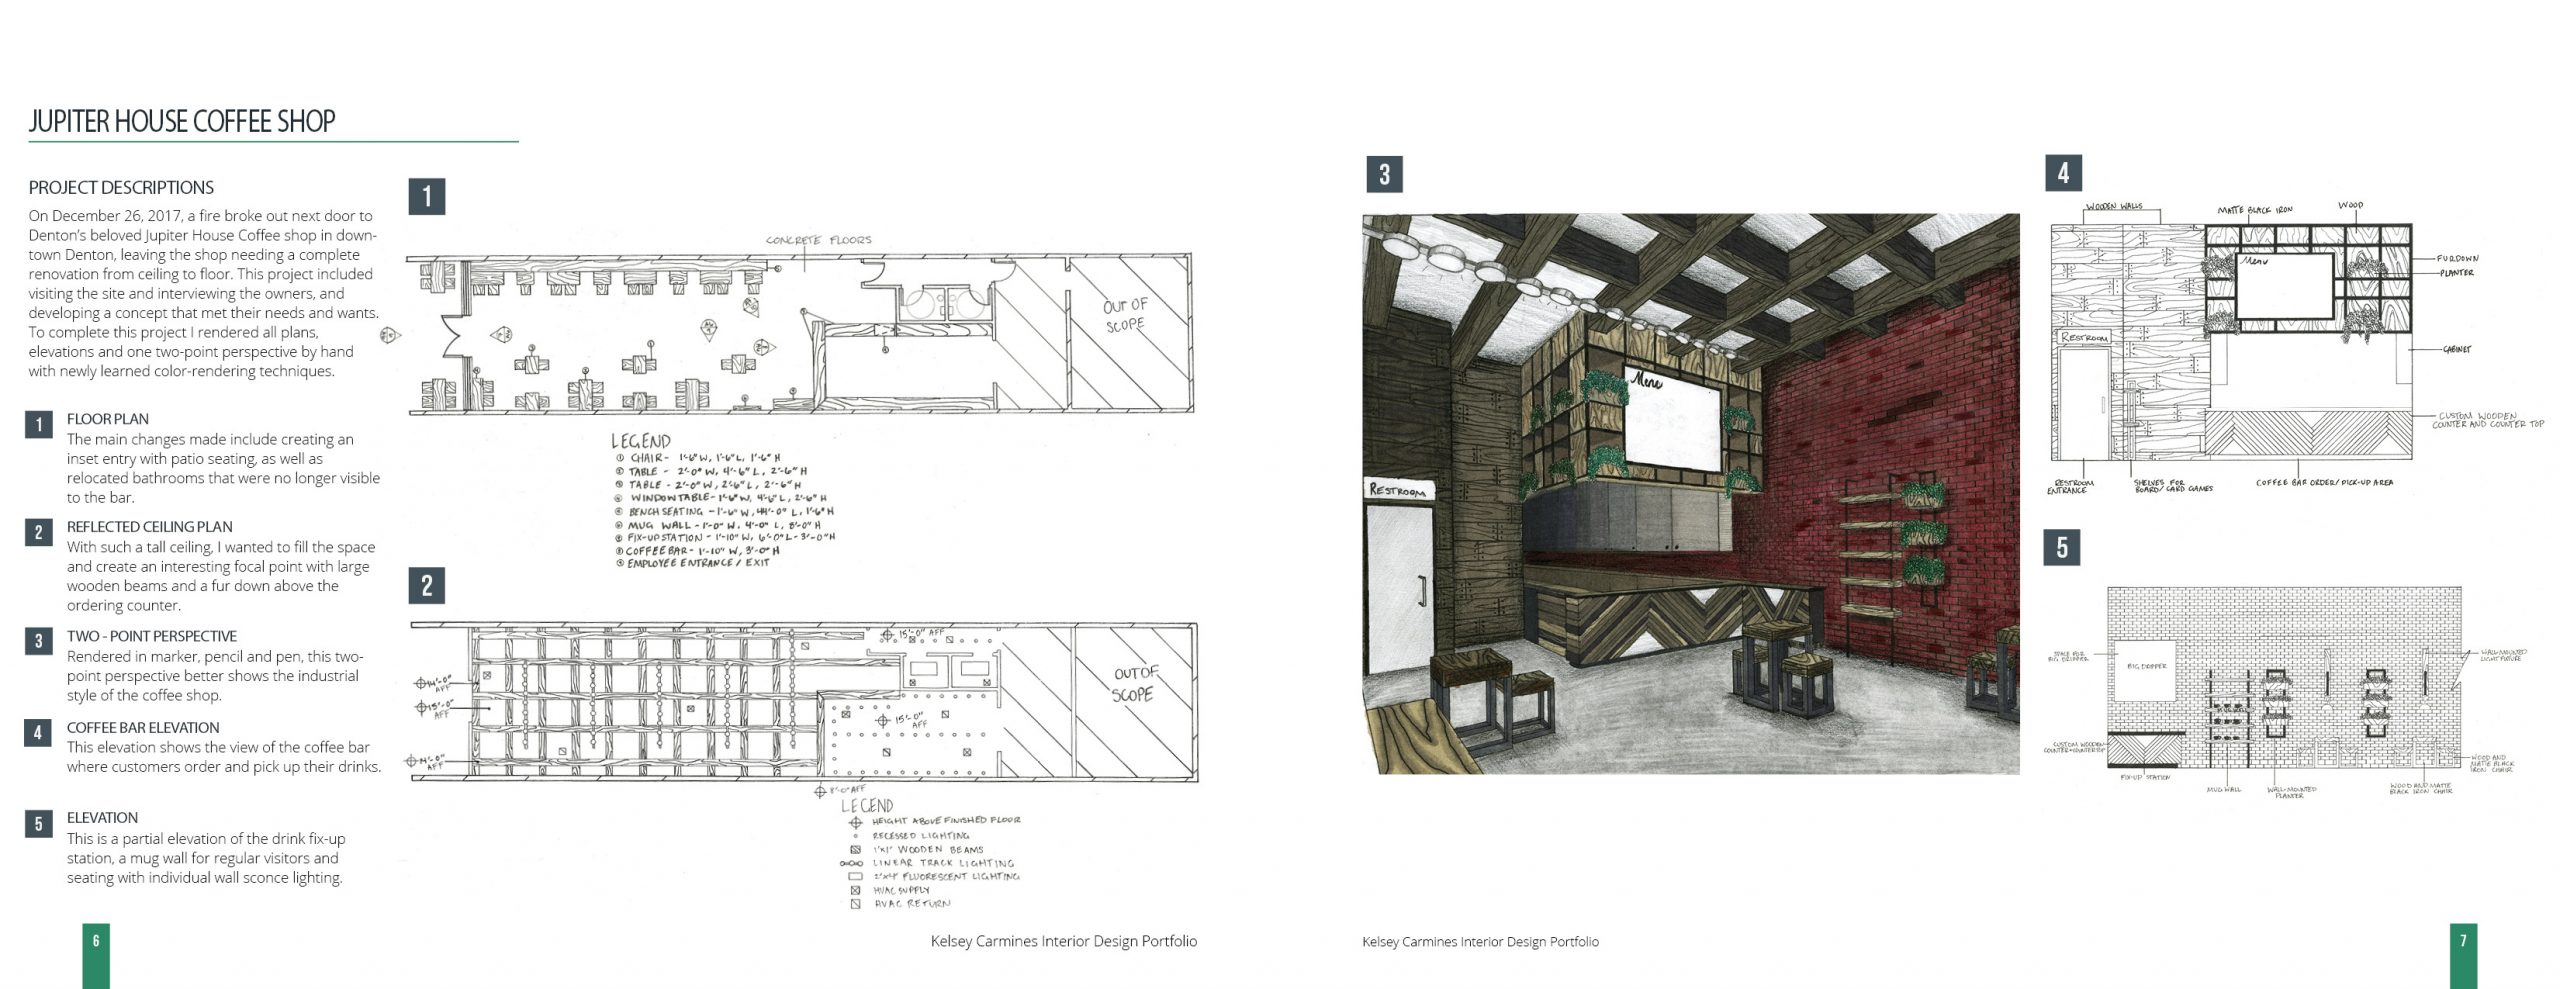 Jupiter house coffee shop, Floor plan, ceiling and elevation plan